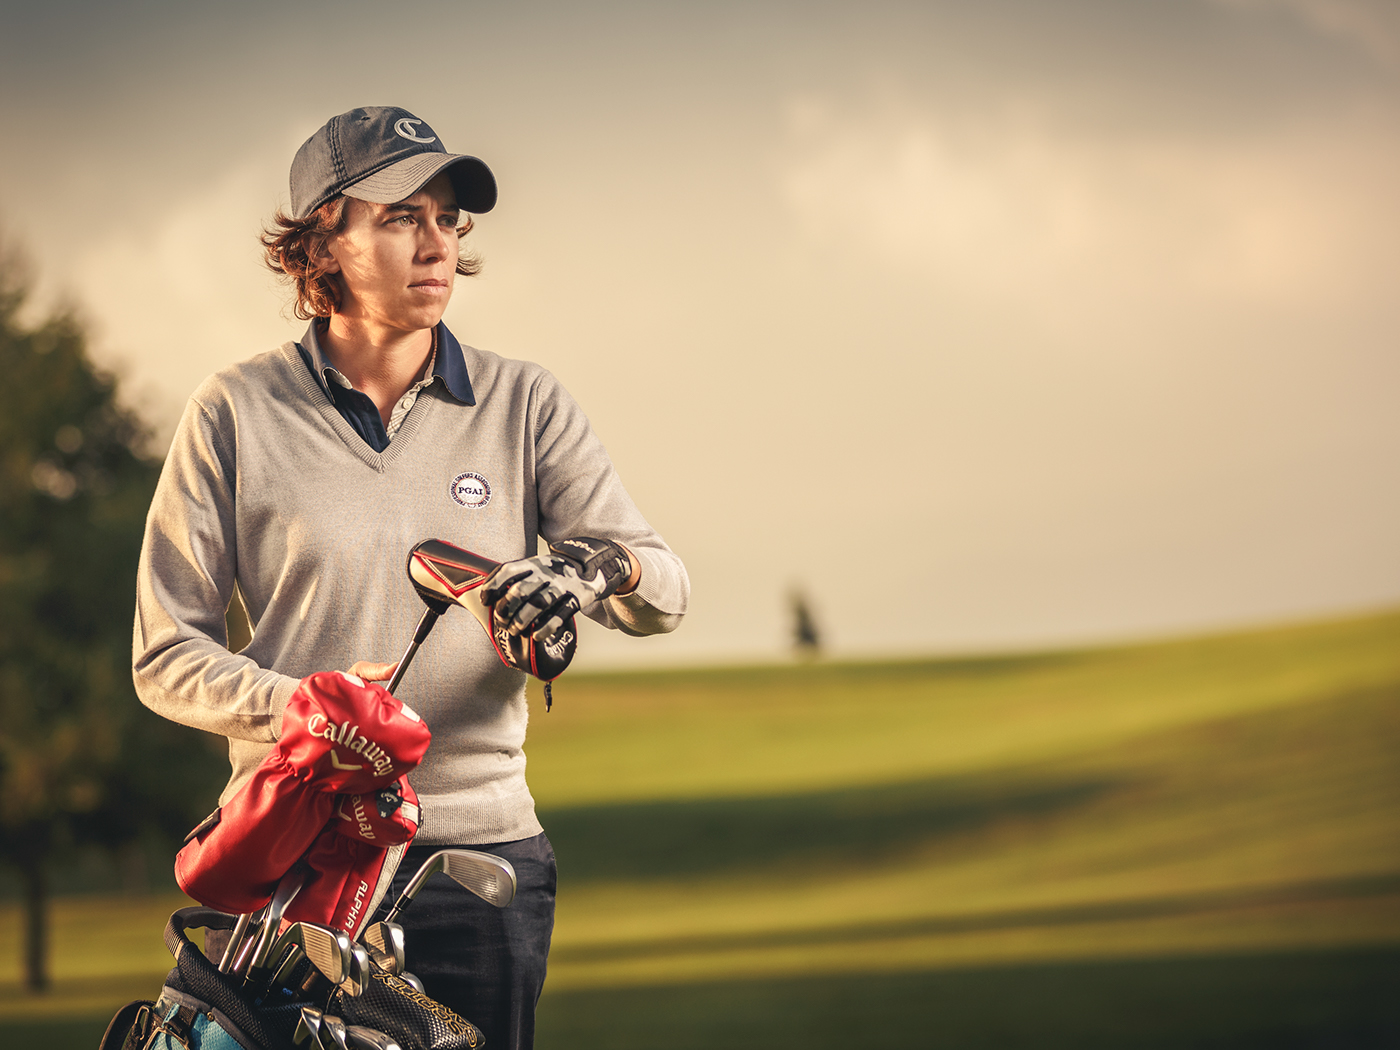 giuliafranchini golf professional matteomescalchin digitalmovie portrait action sport Hasselblad lighting